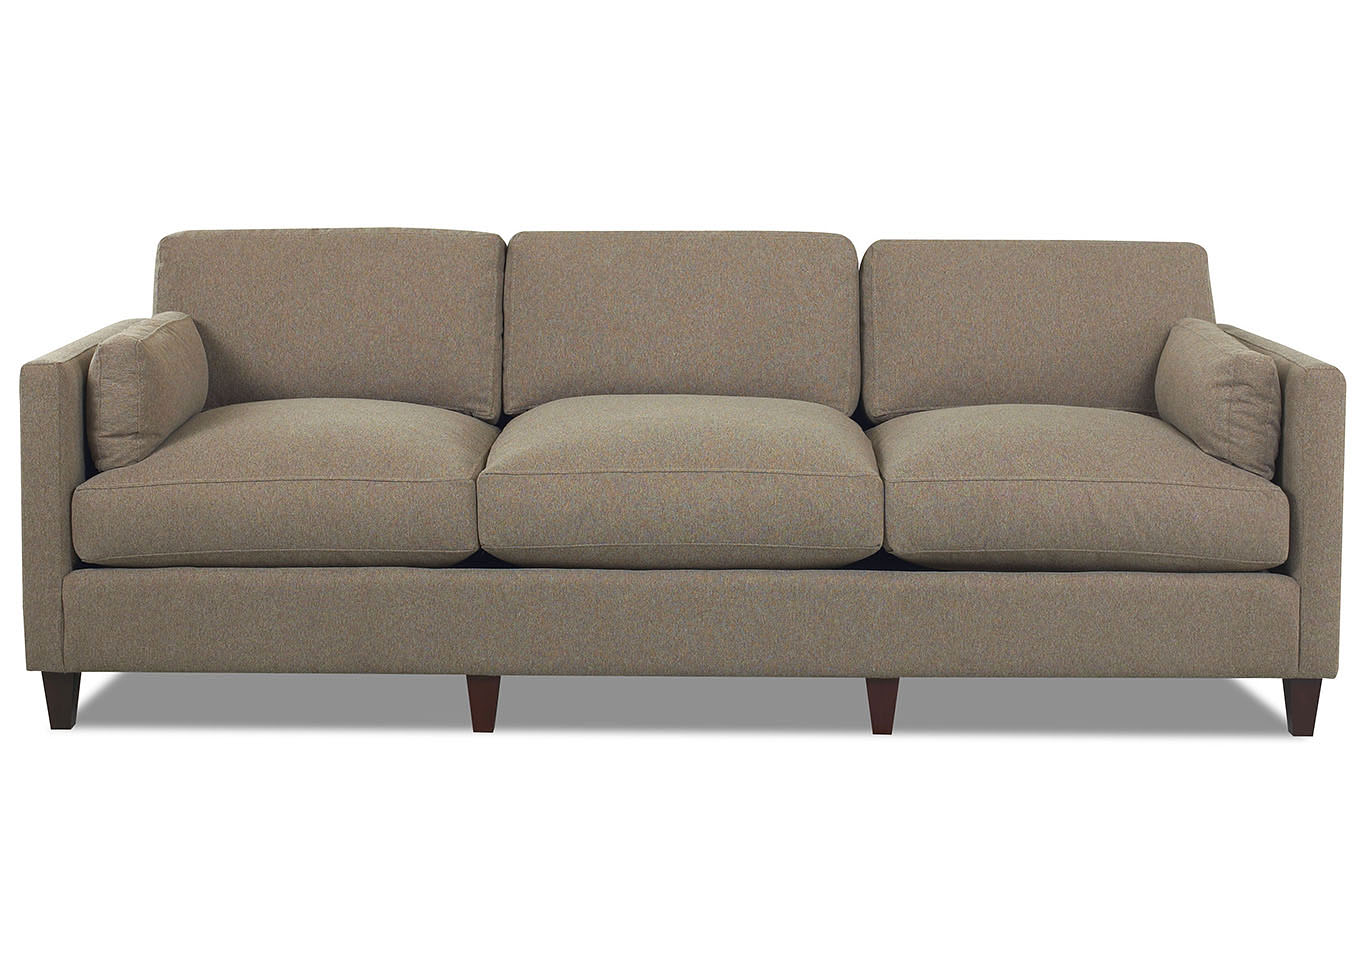 Jordan Taupe Stationary Fabric Sofa,Klaussner Home Furnishings